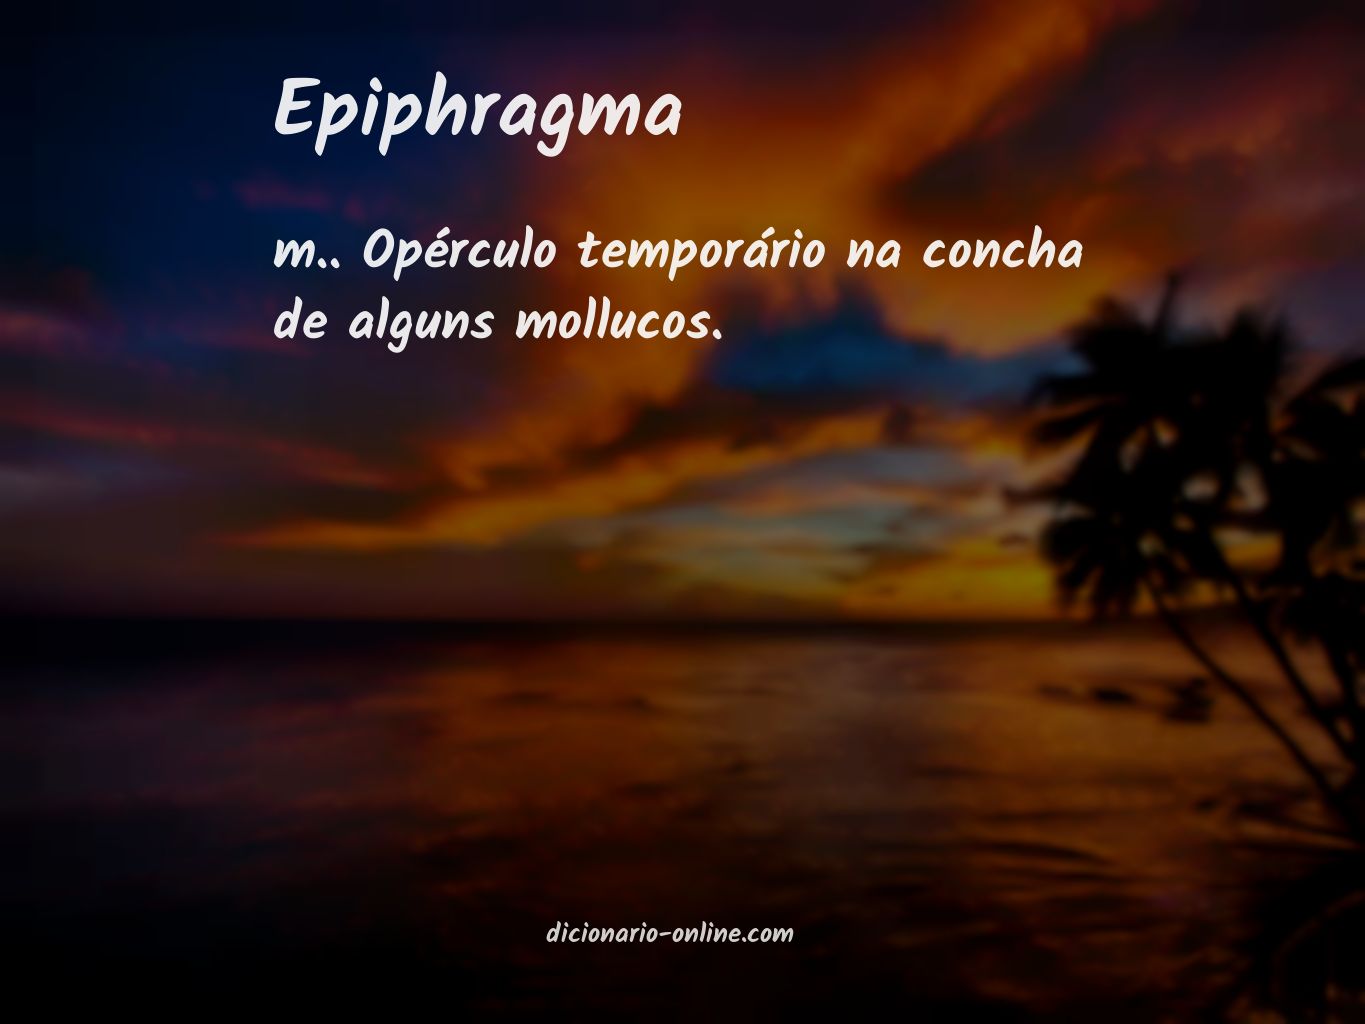 Significado de epiphragma